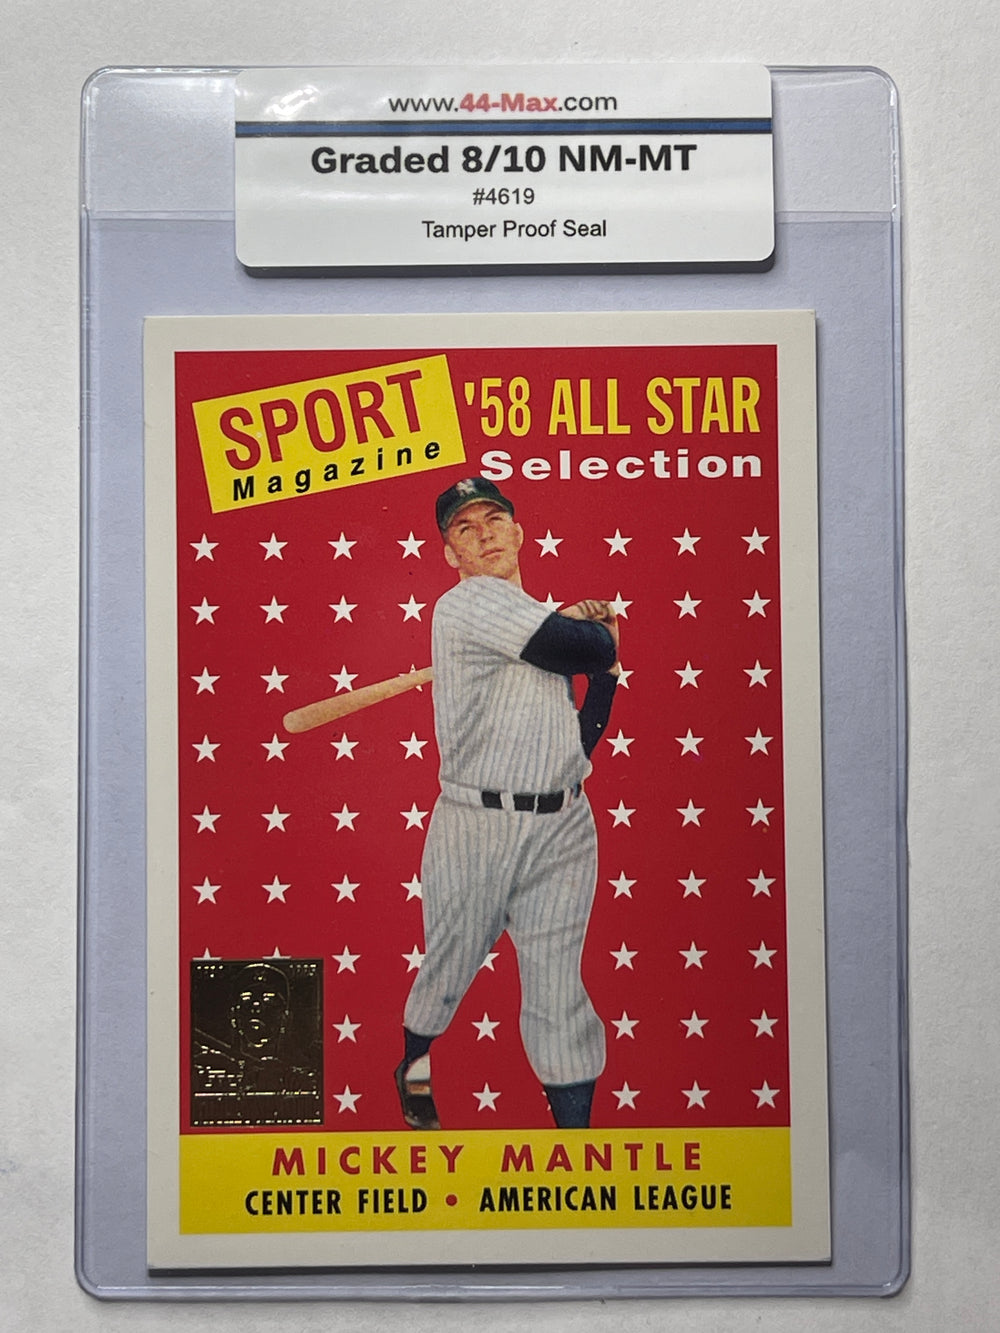 Mickey Mantle 1996 Topps Baseball Card. 44-Max 8/10 NM-MT #4619